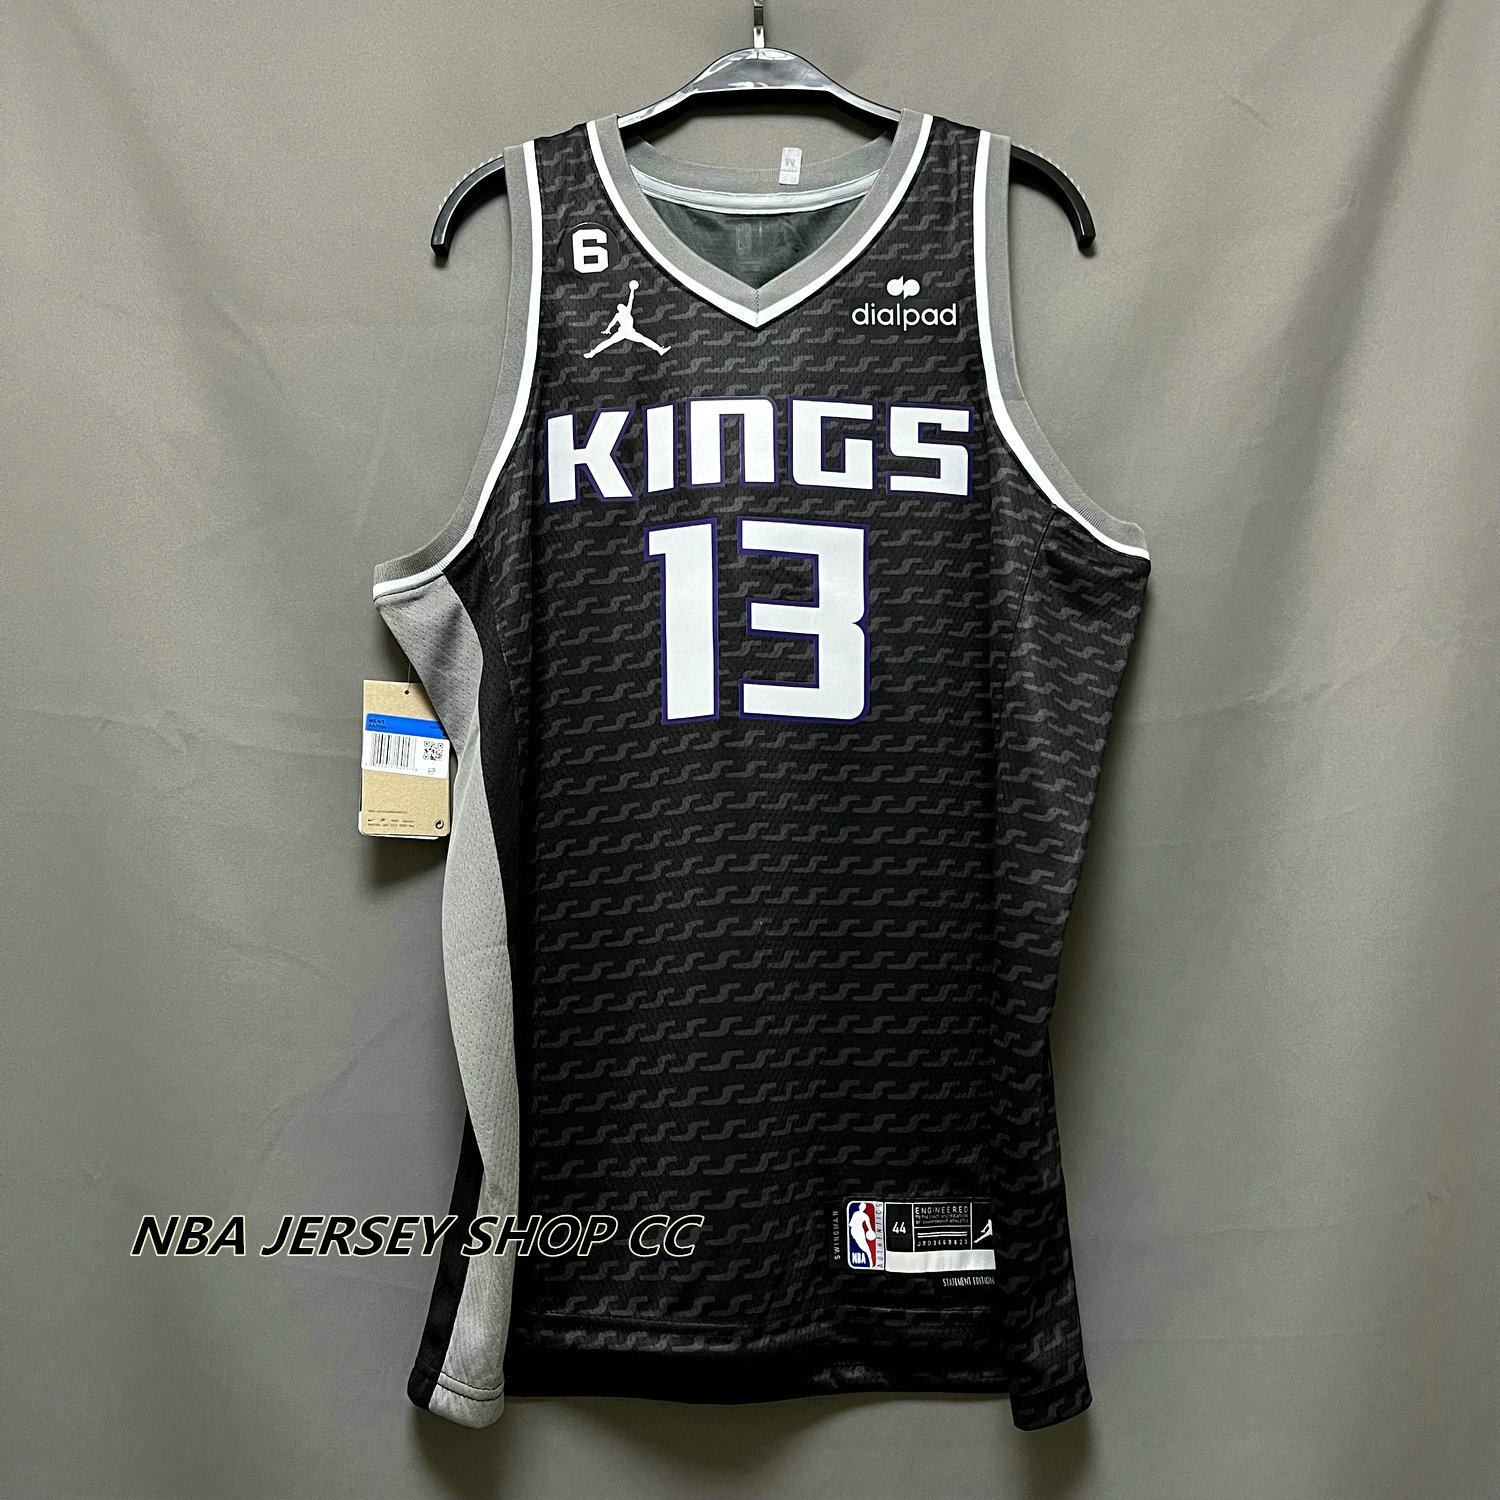 Original Keegan Murray 13 Sacramento Kings Basketball Player Poster Gift T- Shirt, hoodie, sweater, long sleeve and tank top